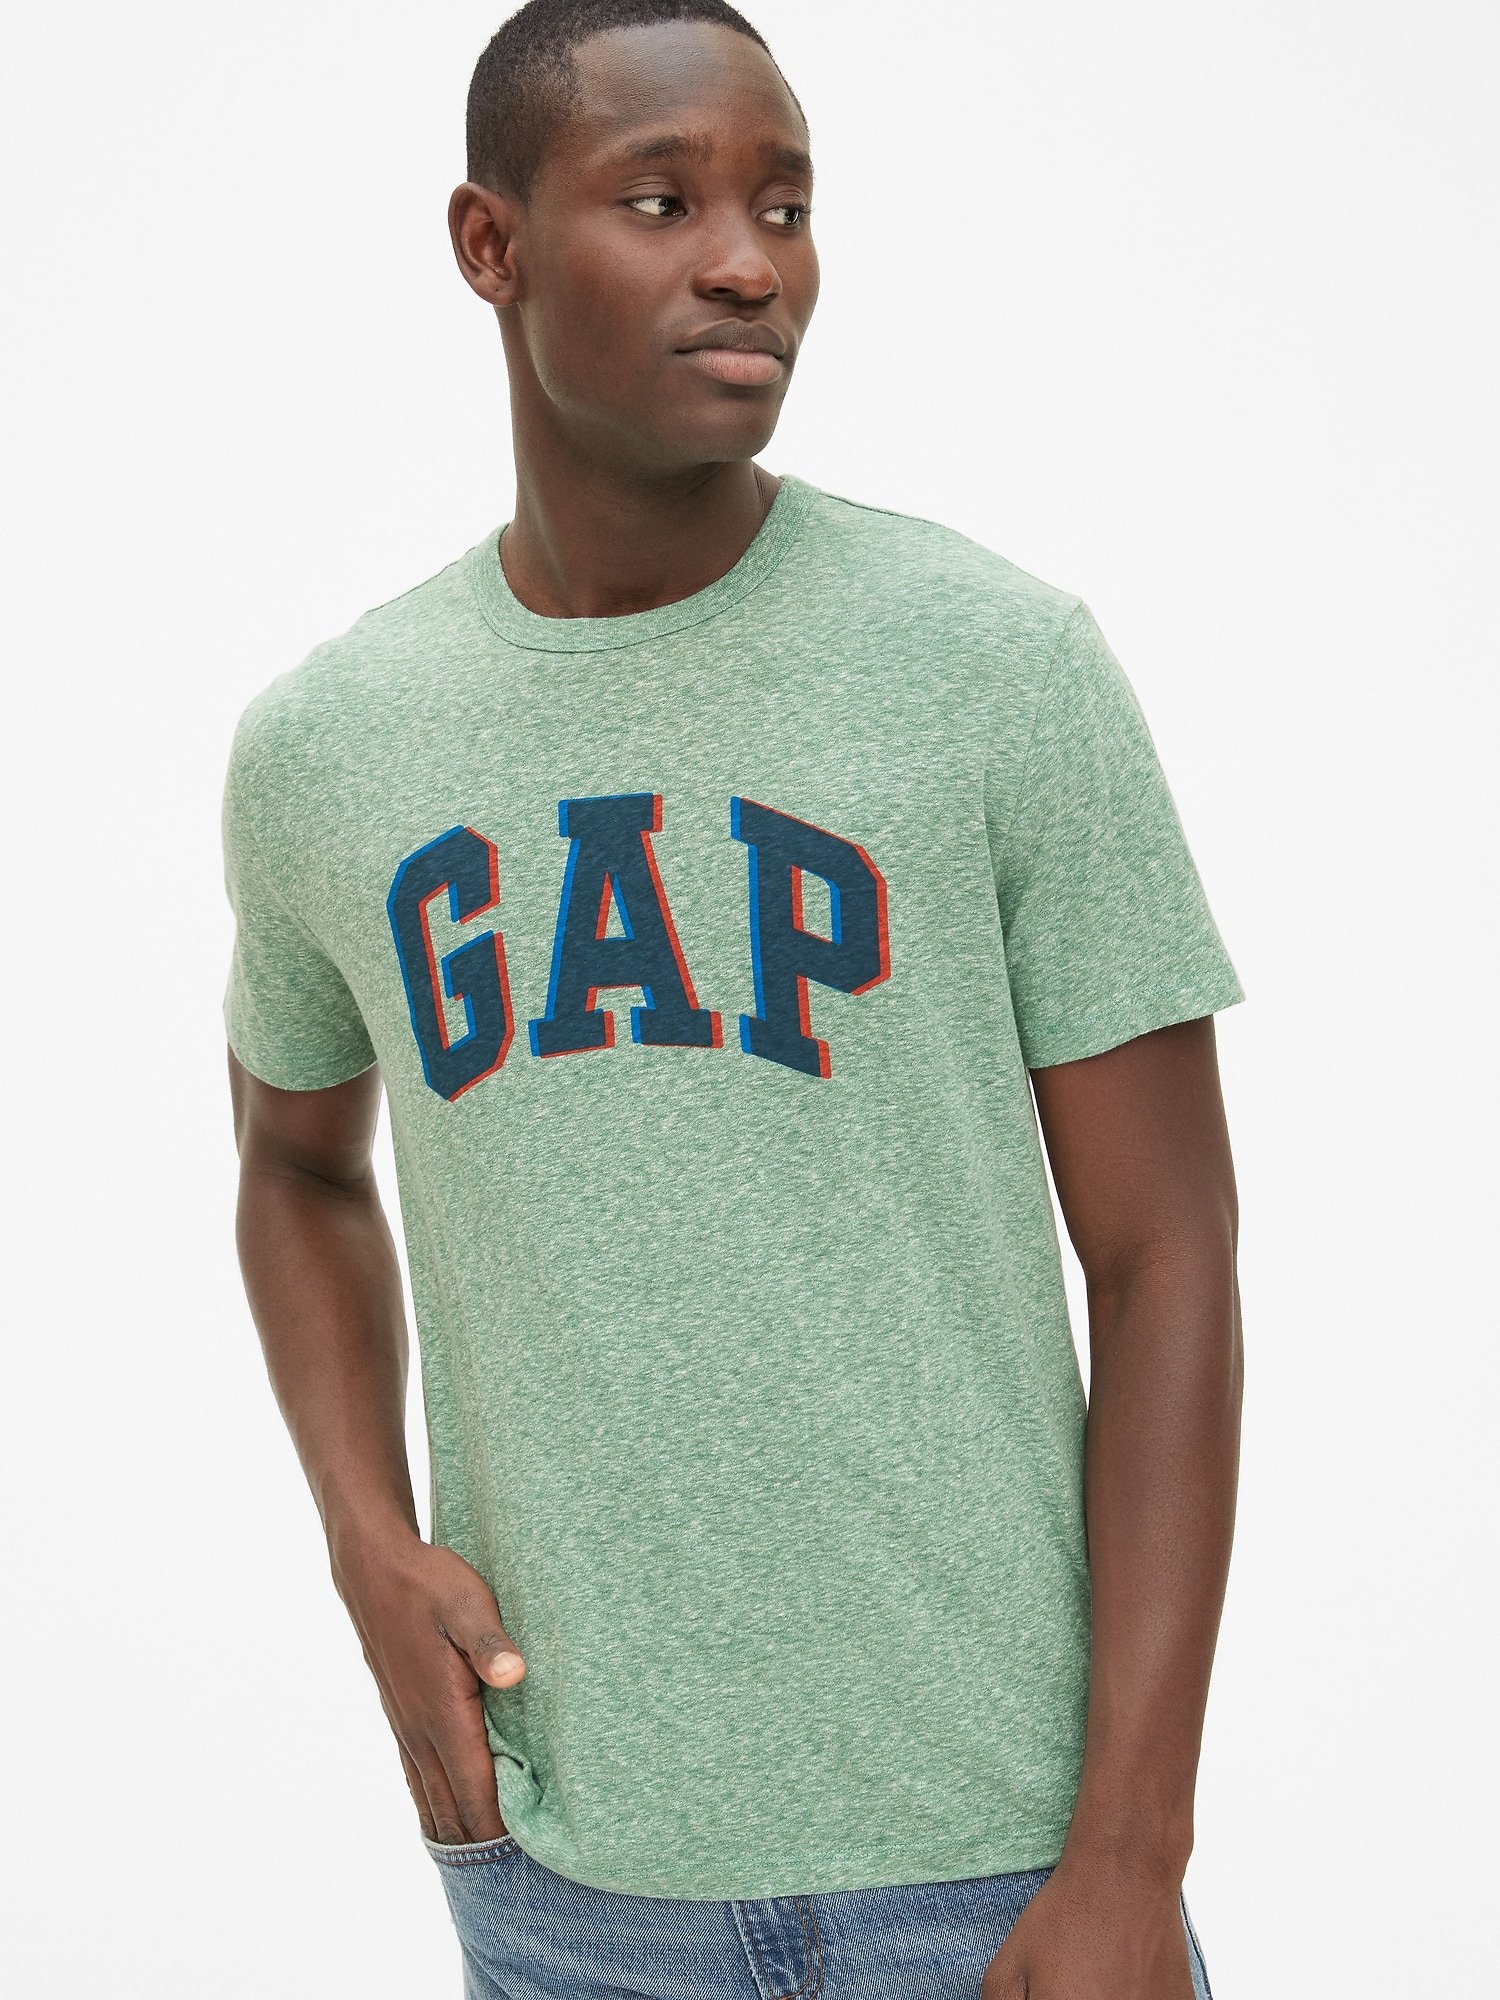 Gap Logo 3D T-Shirt product image